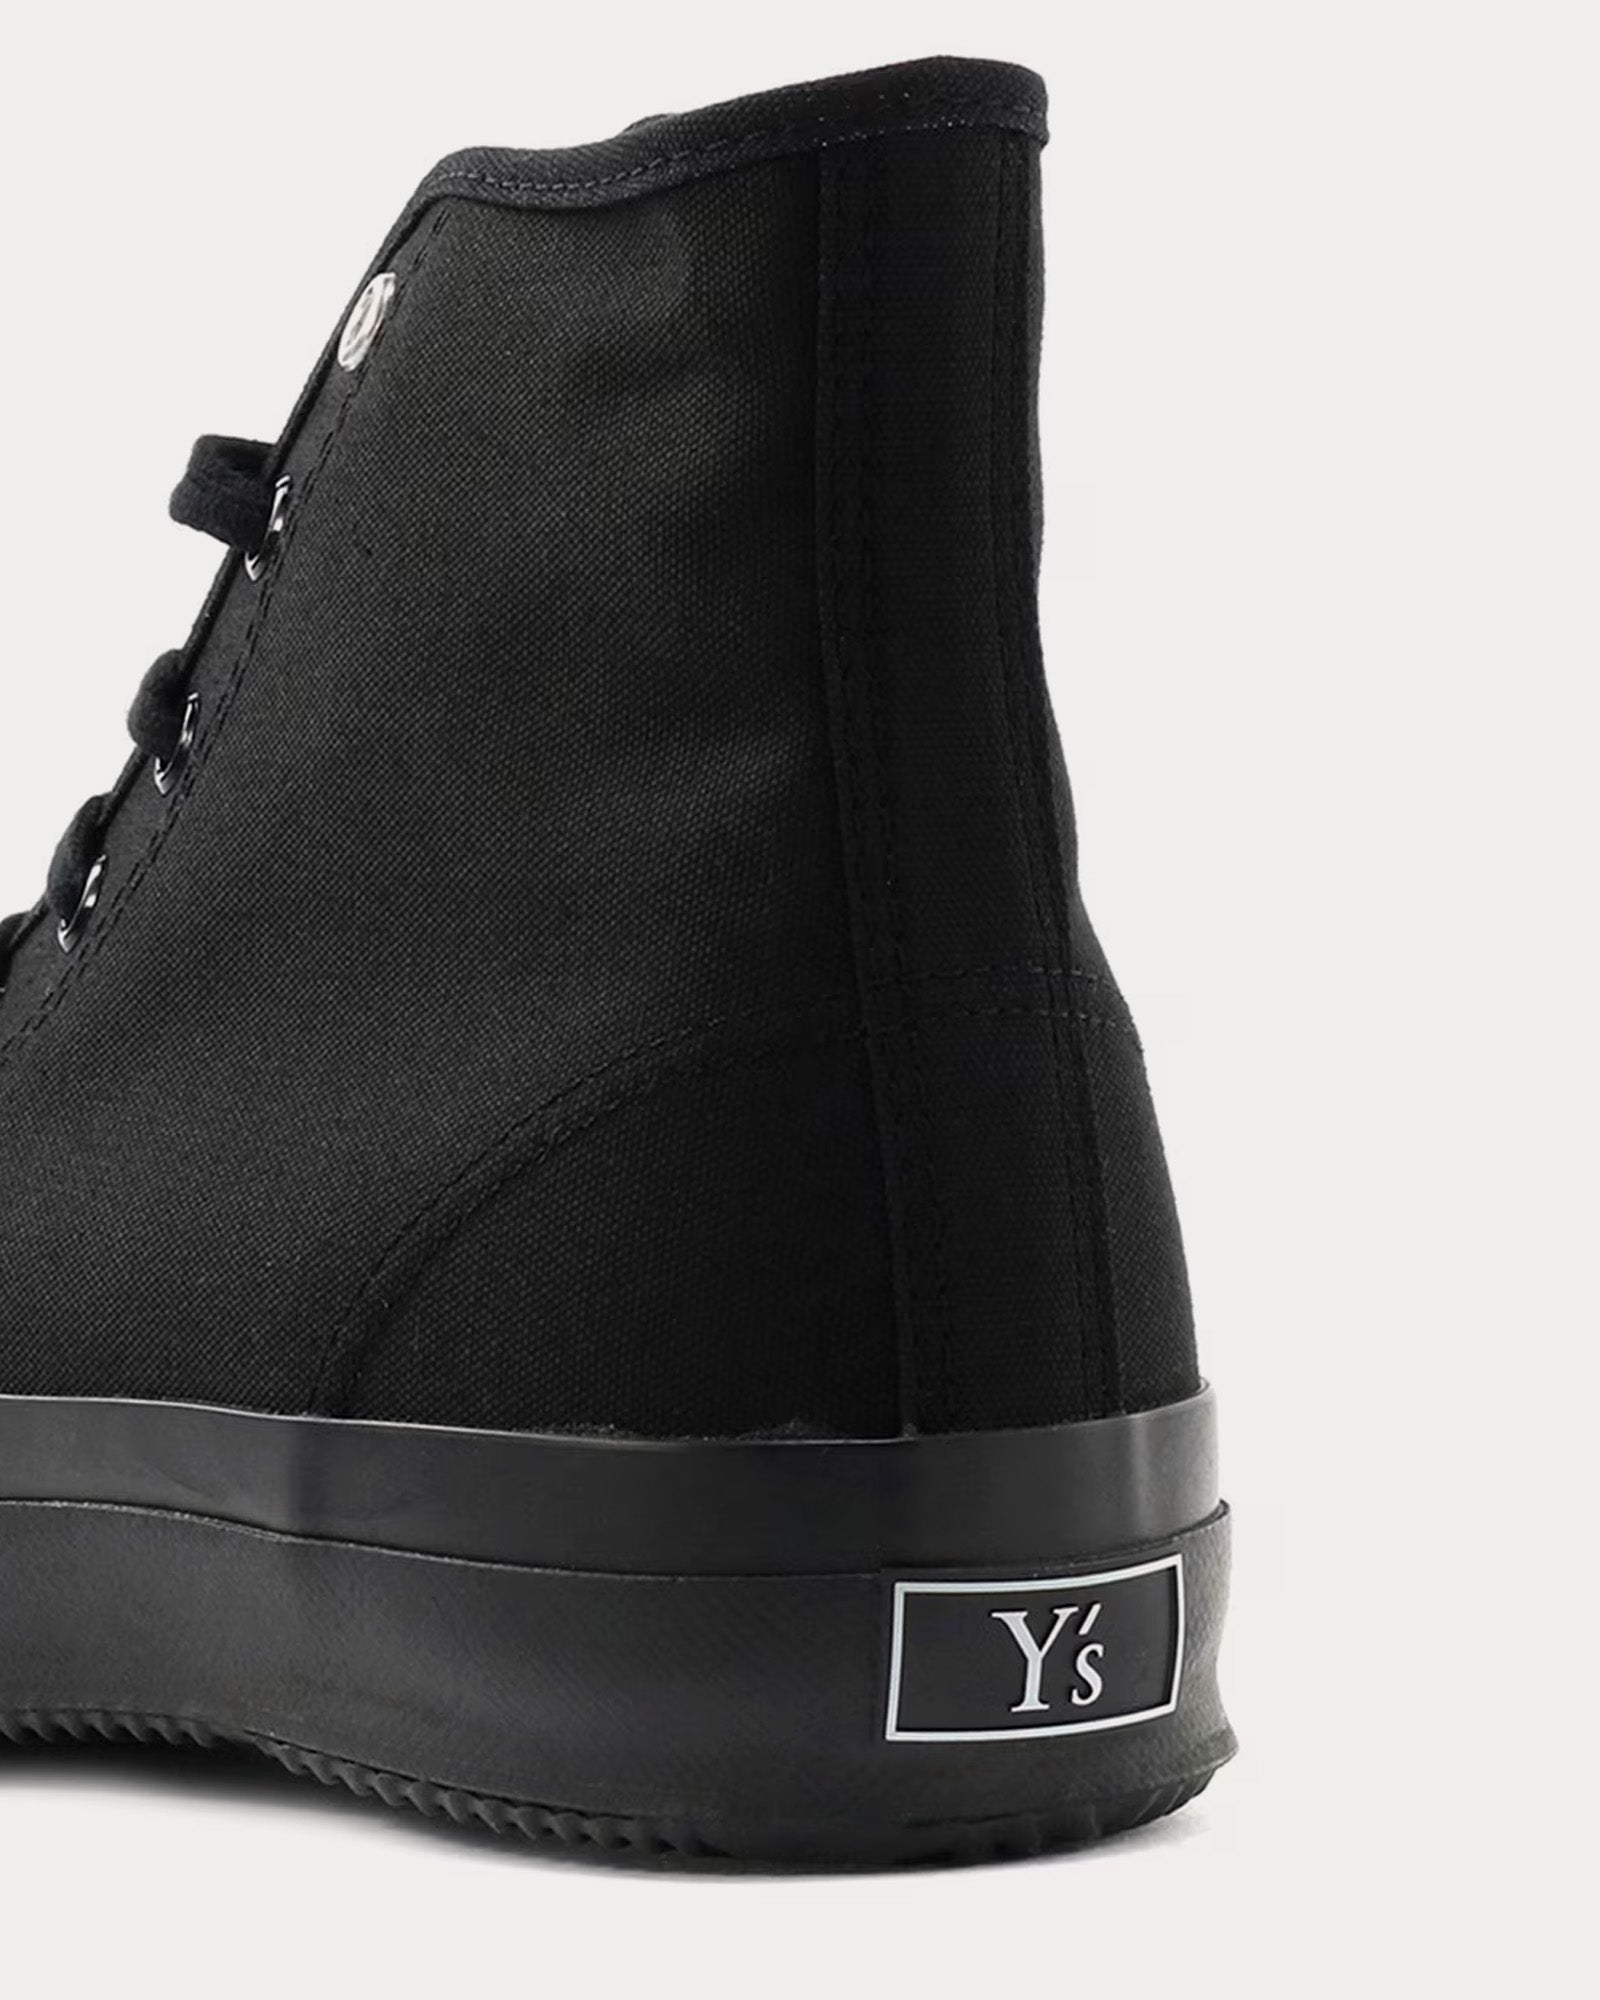 Yohji Yamamoto - Y's No8 Classic Canvas Black High Top Sneakers